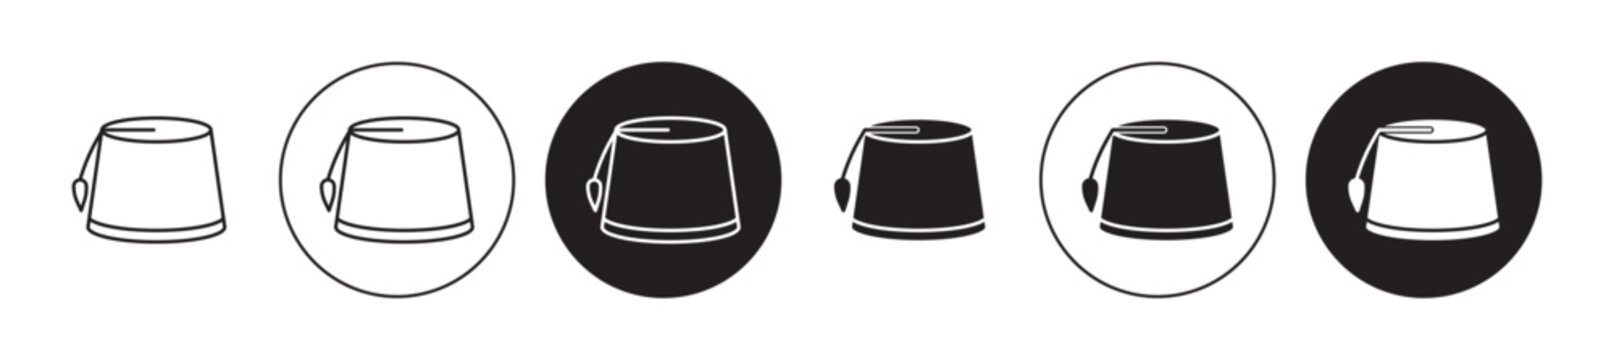 Fez hat line icon set. Morocco tarboosh turkish cap icon in black color. Lebanon lebanese hat icon in black color for ui designs. © kru